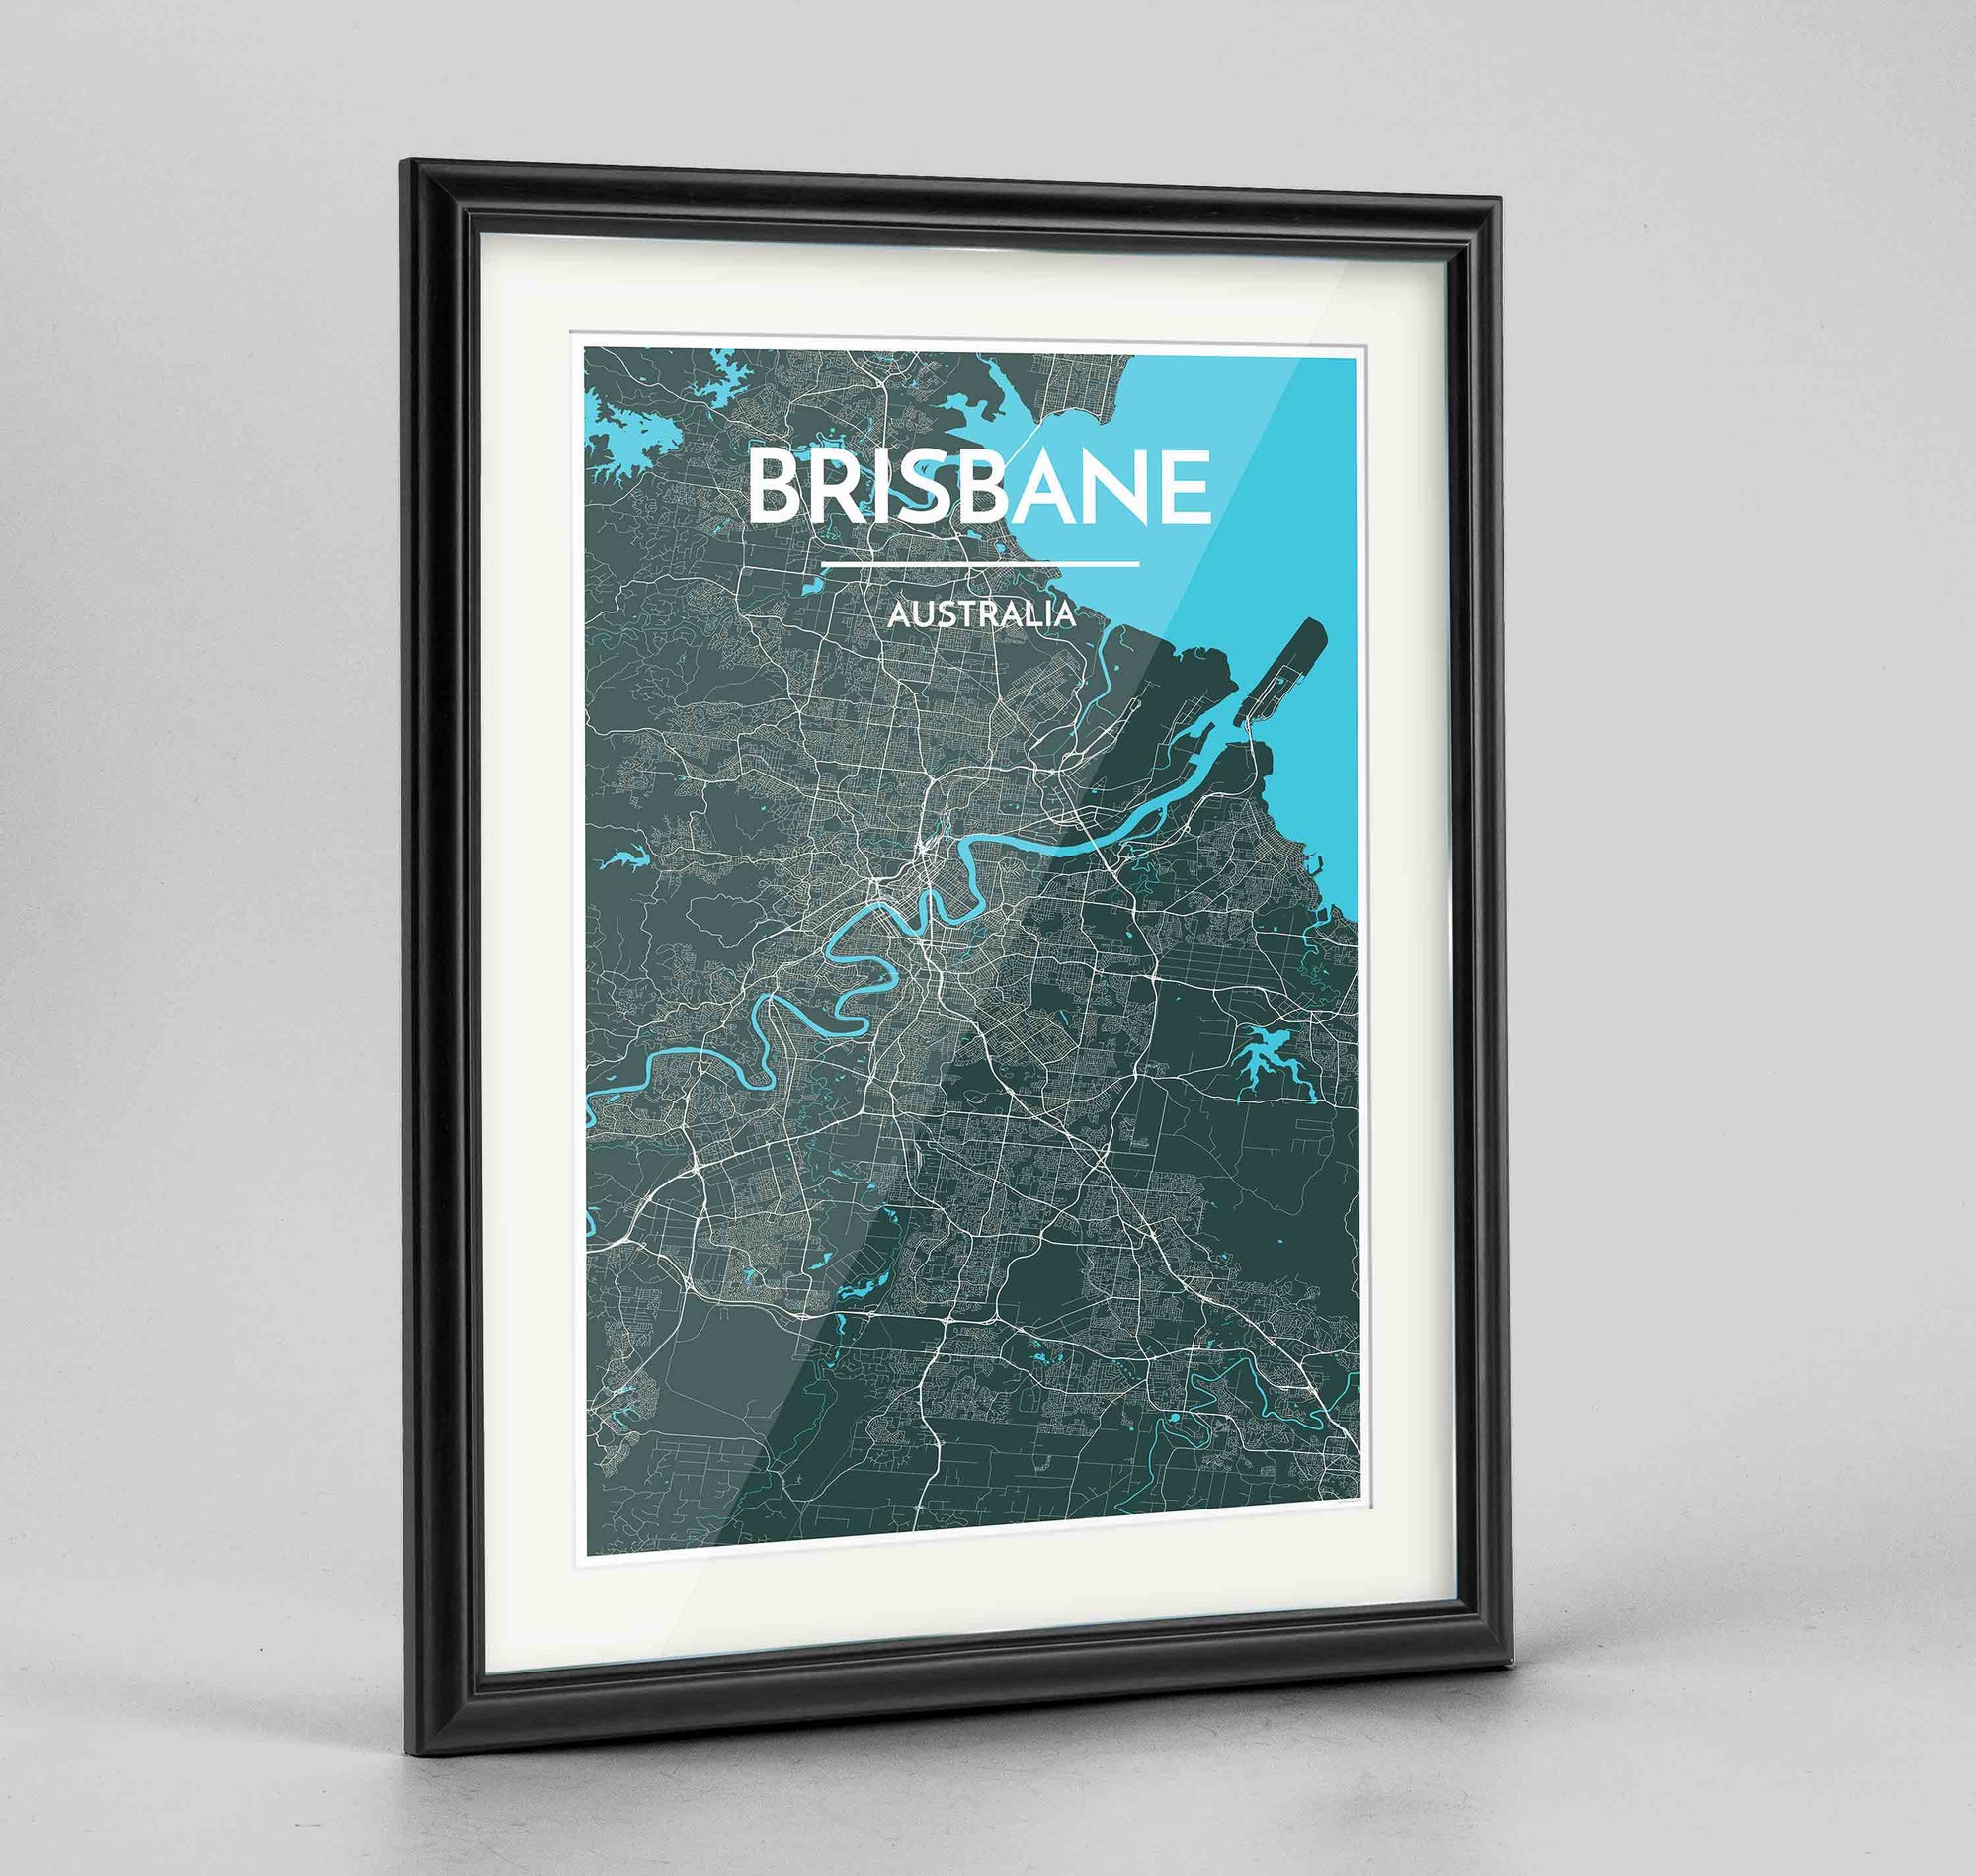 Brisbane City Map Art Prints - High Quality Custom Made Framed Art - Point Two Design